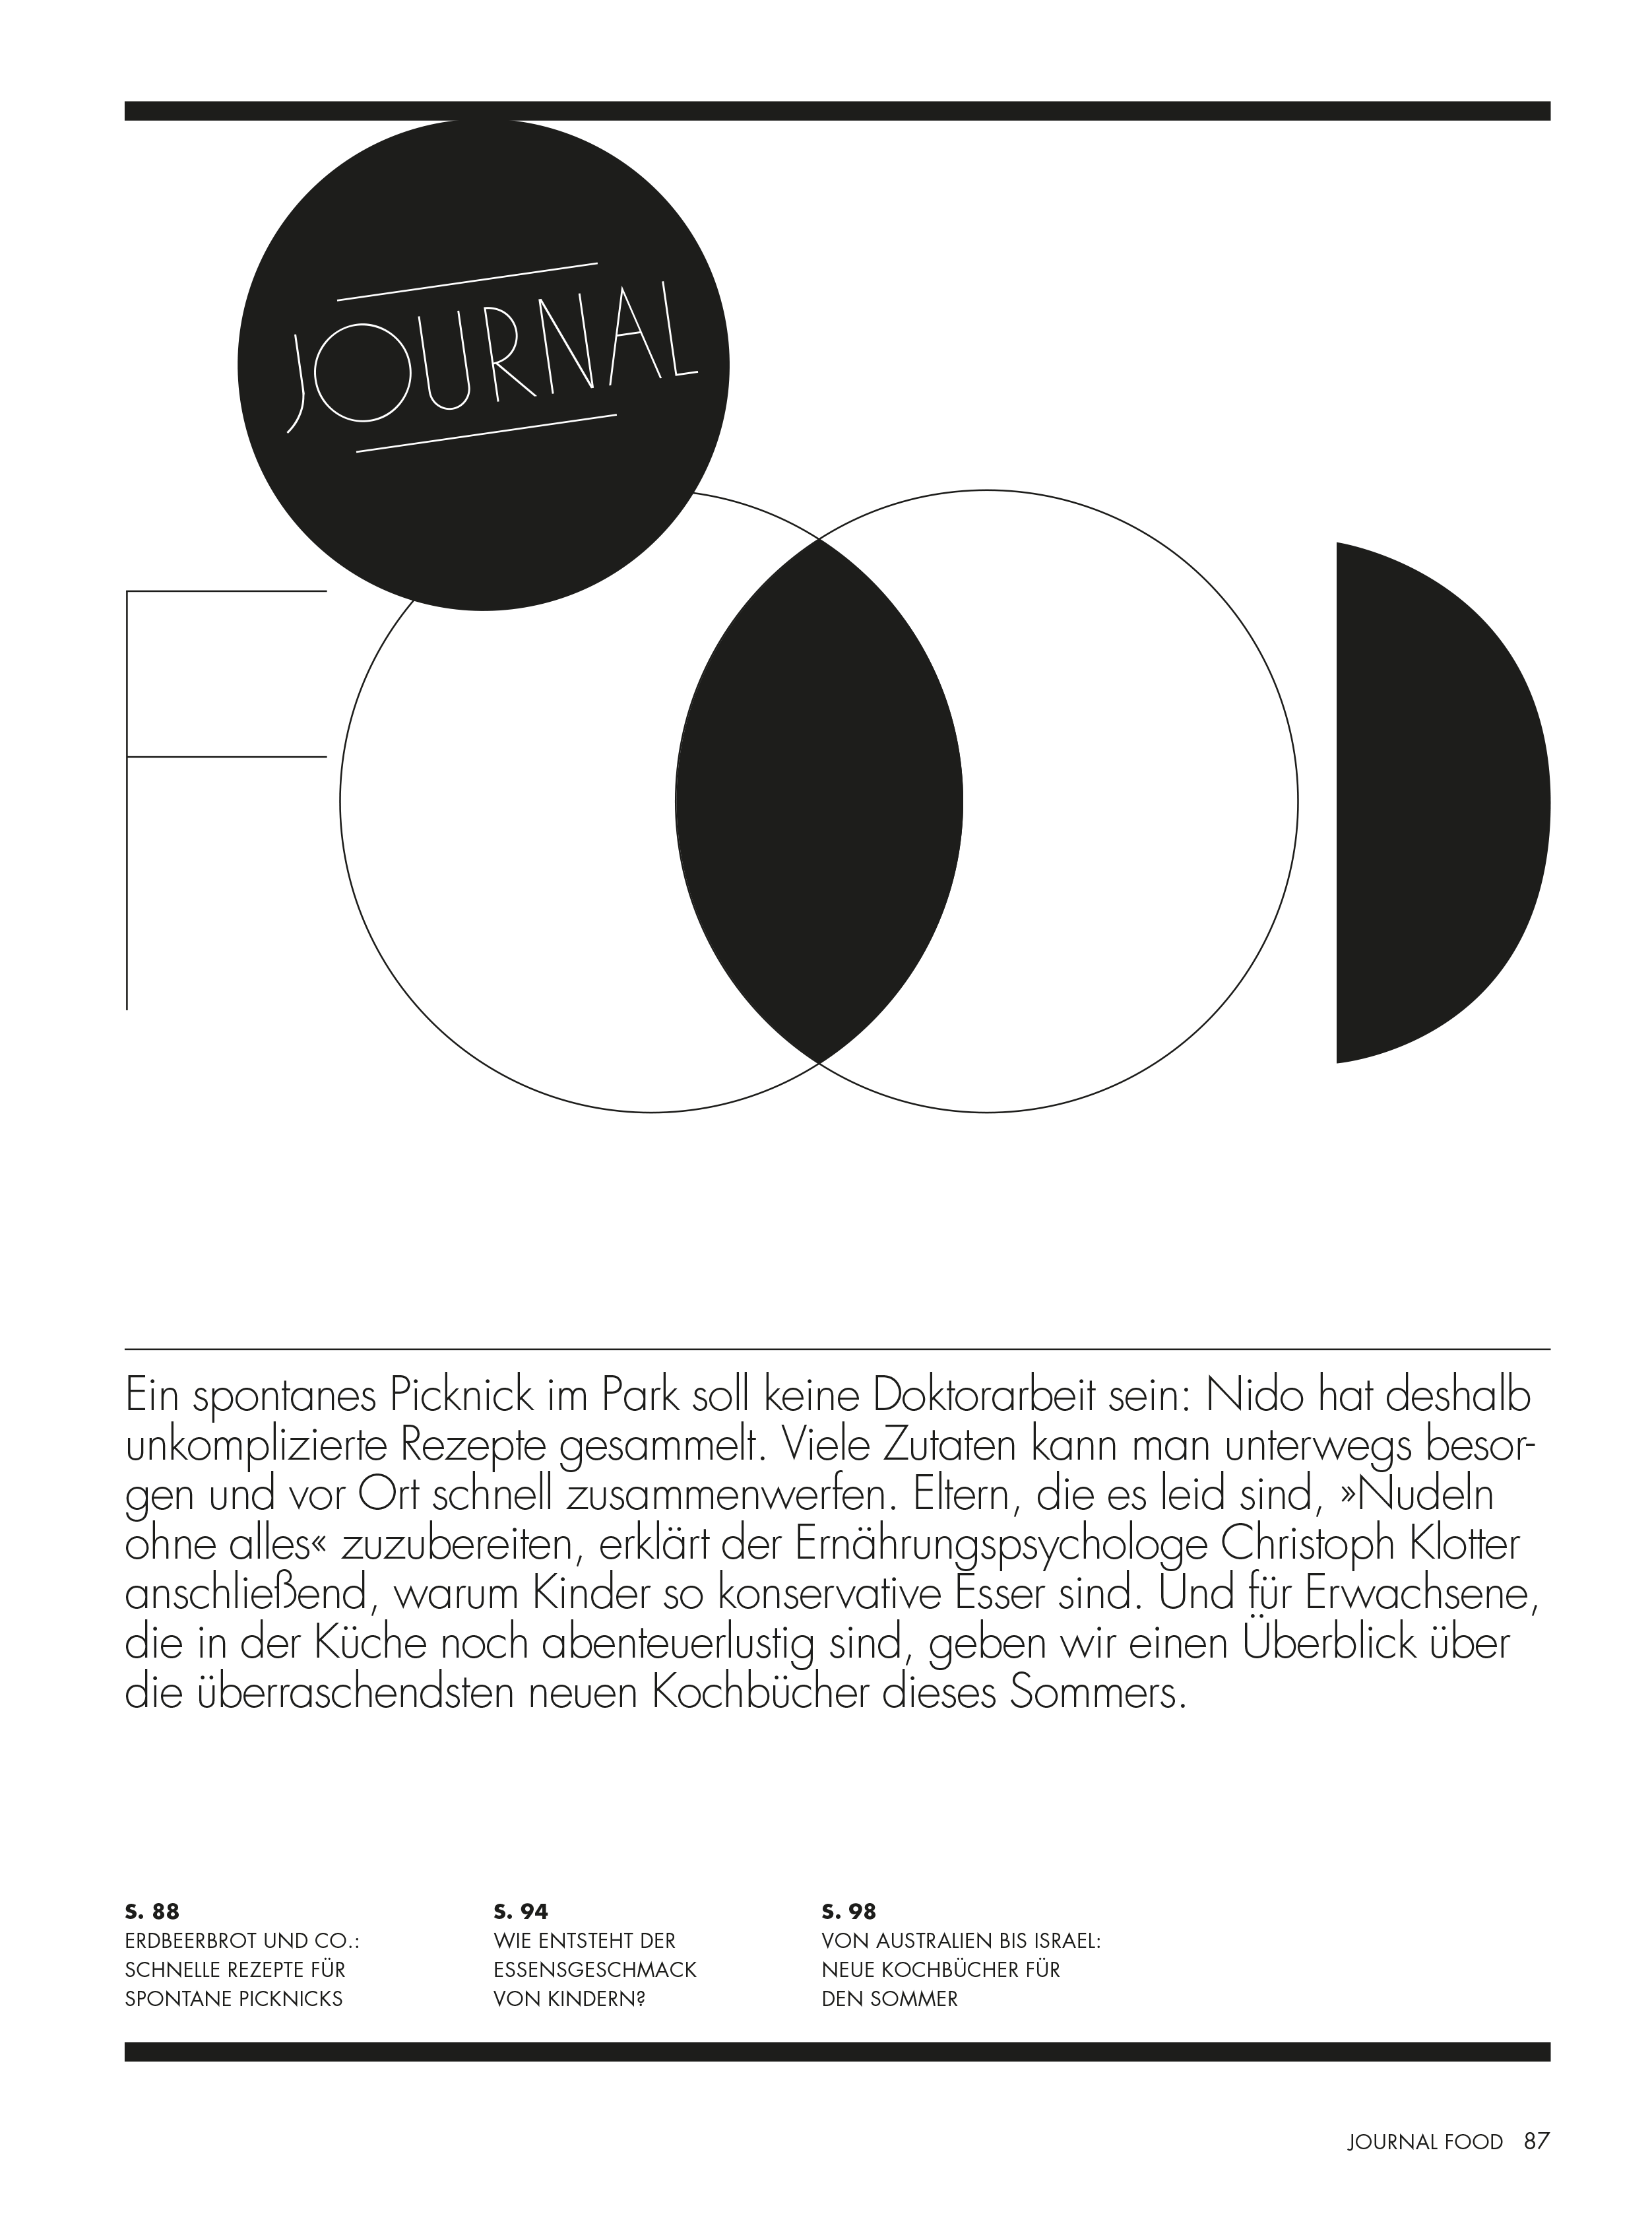 087-Journal-Food